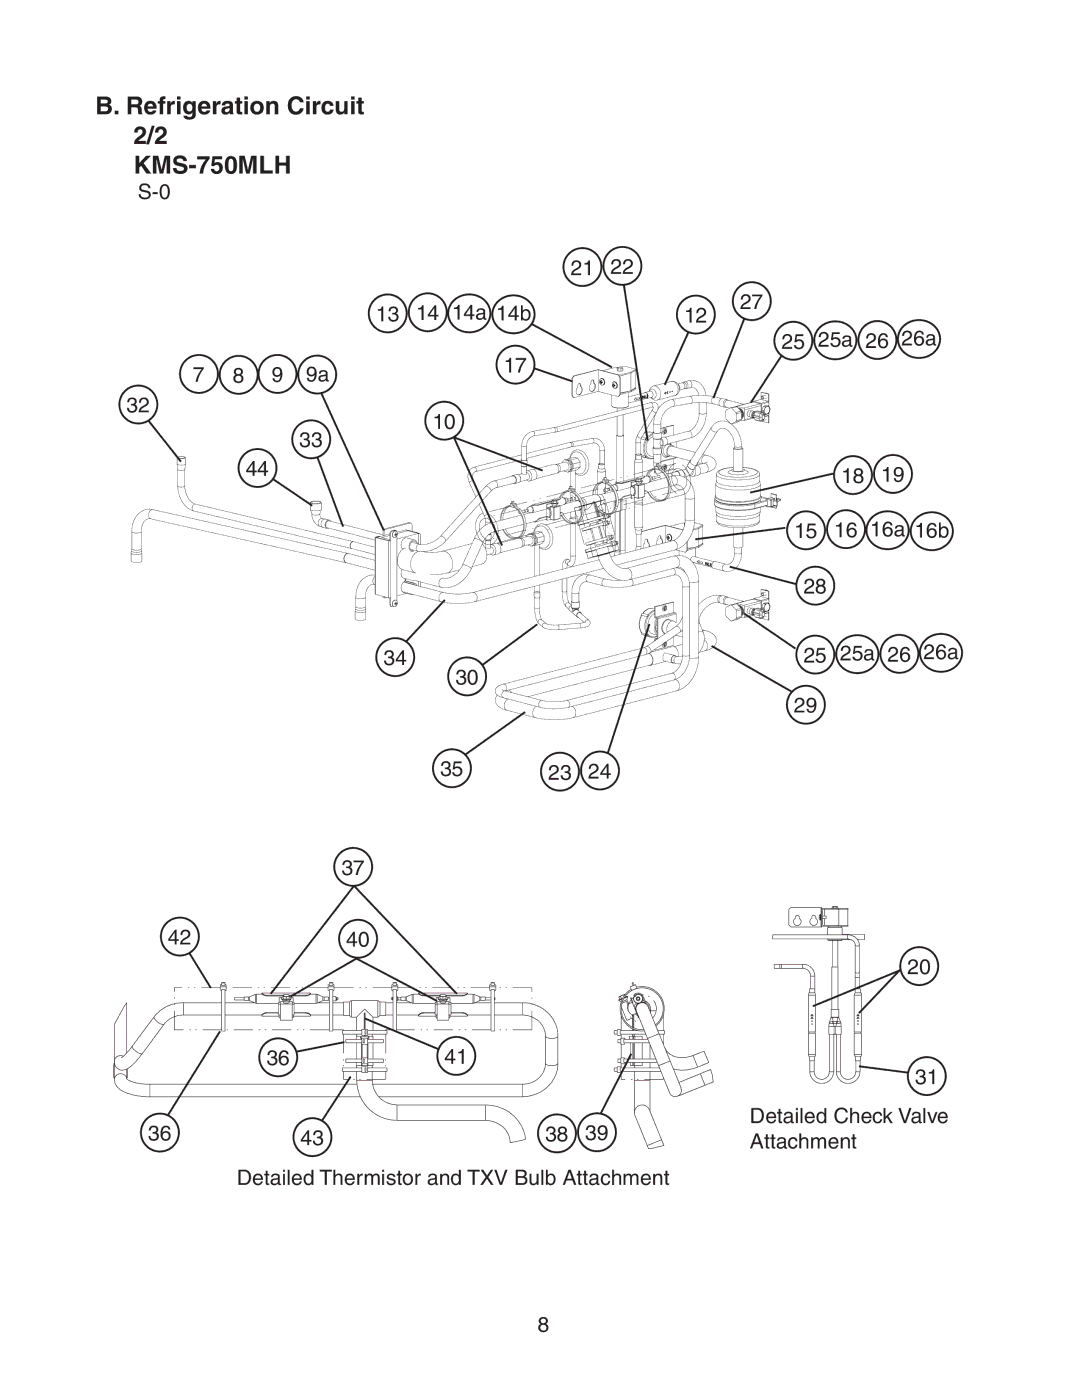 Hoshizaki KMS-750MLH manual 14a 14b 25a 26a 16a 16b, Detailed Thermistor and TXV Bulb Attachment 